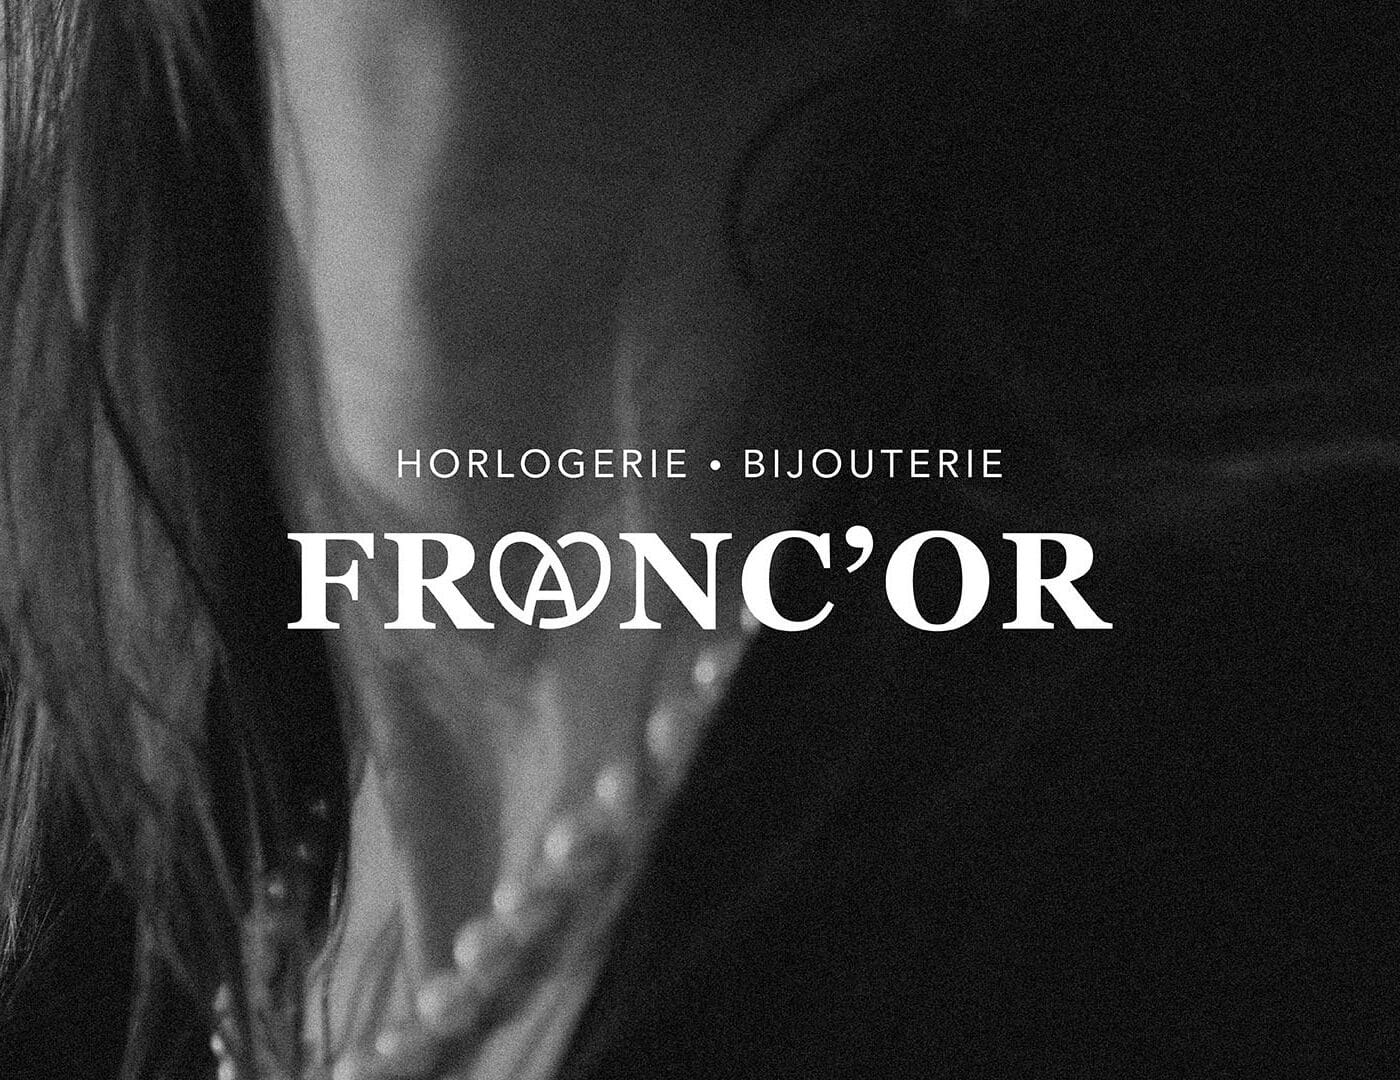 projet FRANC OR logo 1400x1080 - Bijouterie Dotter